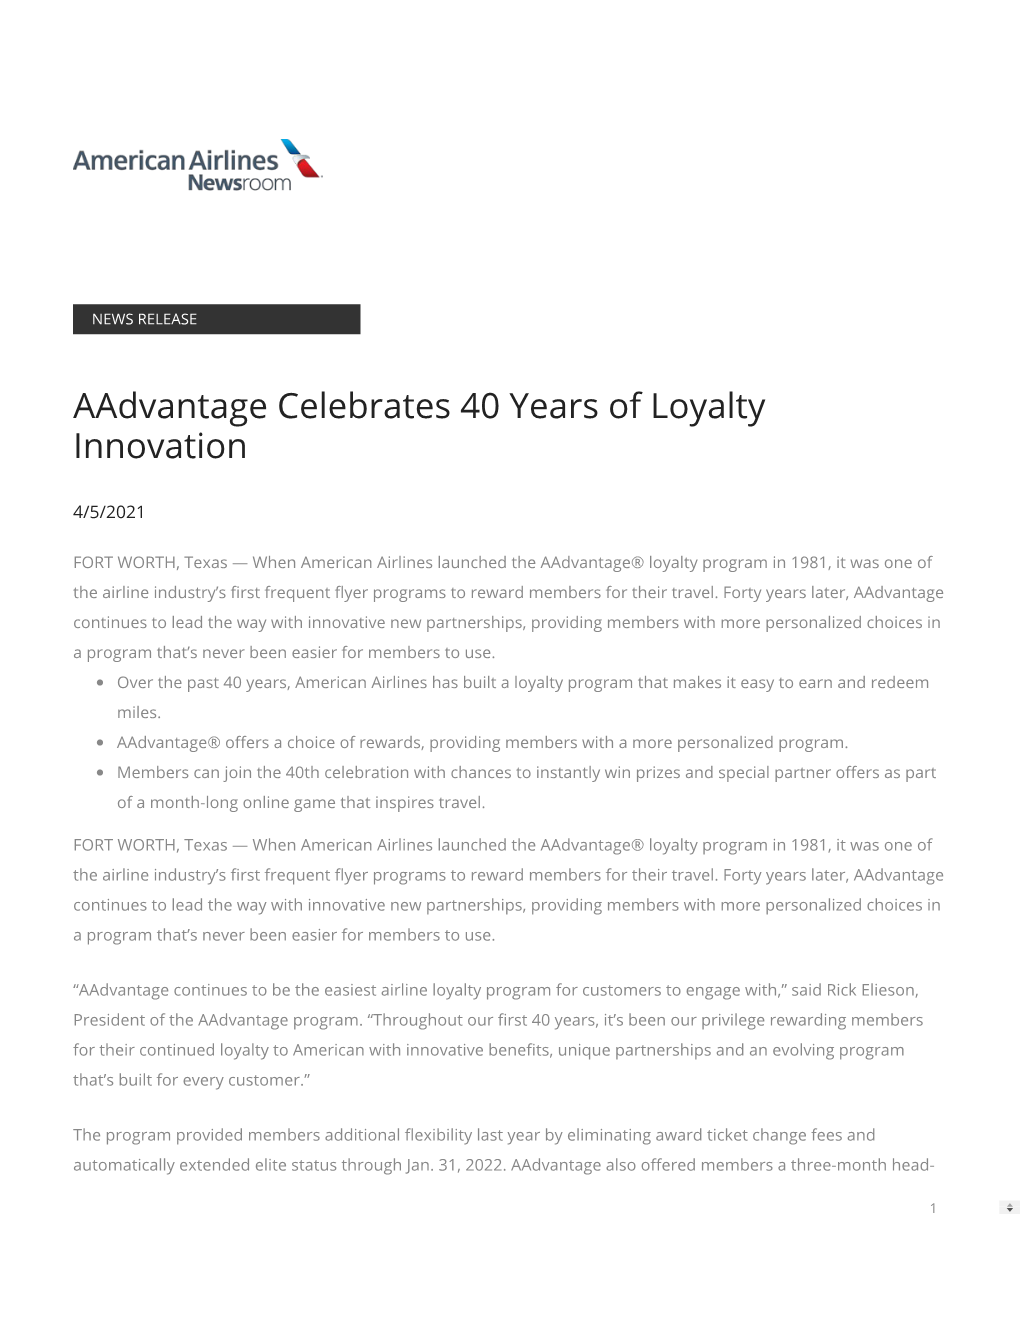 Aadvantage Celebrates 40 Years of Loyalty Innovation